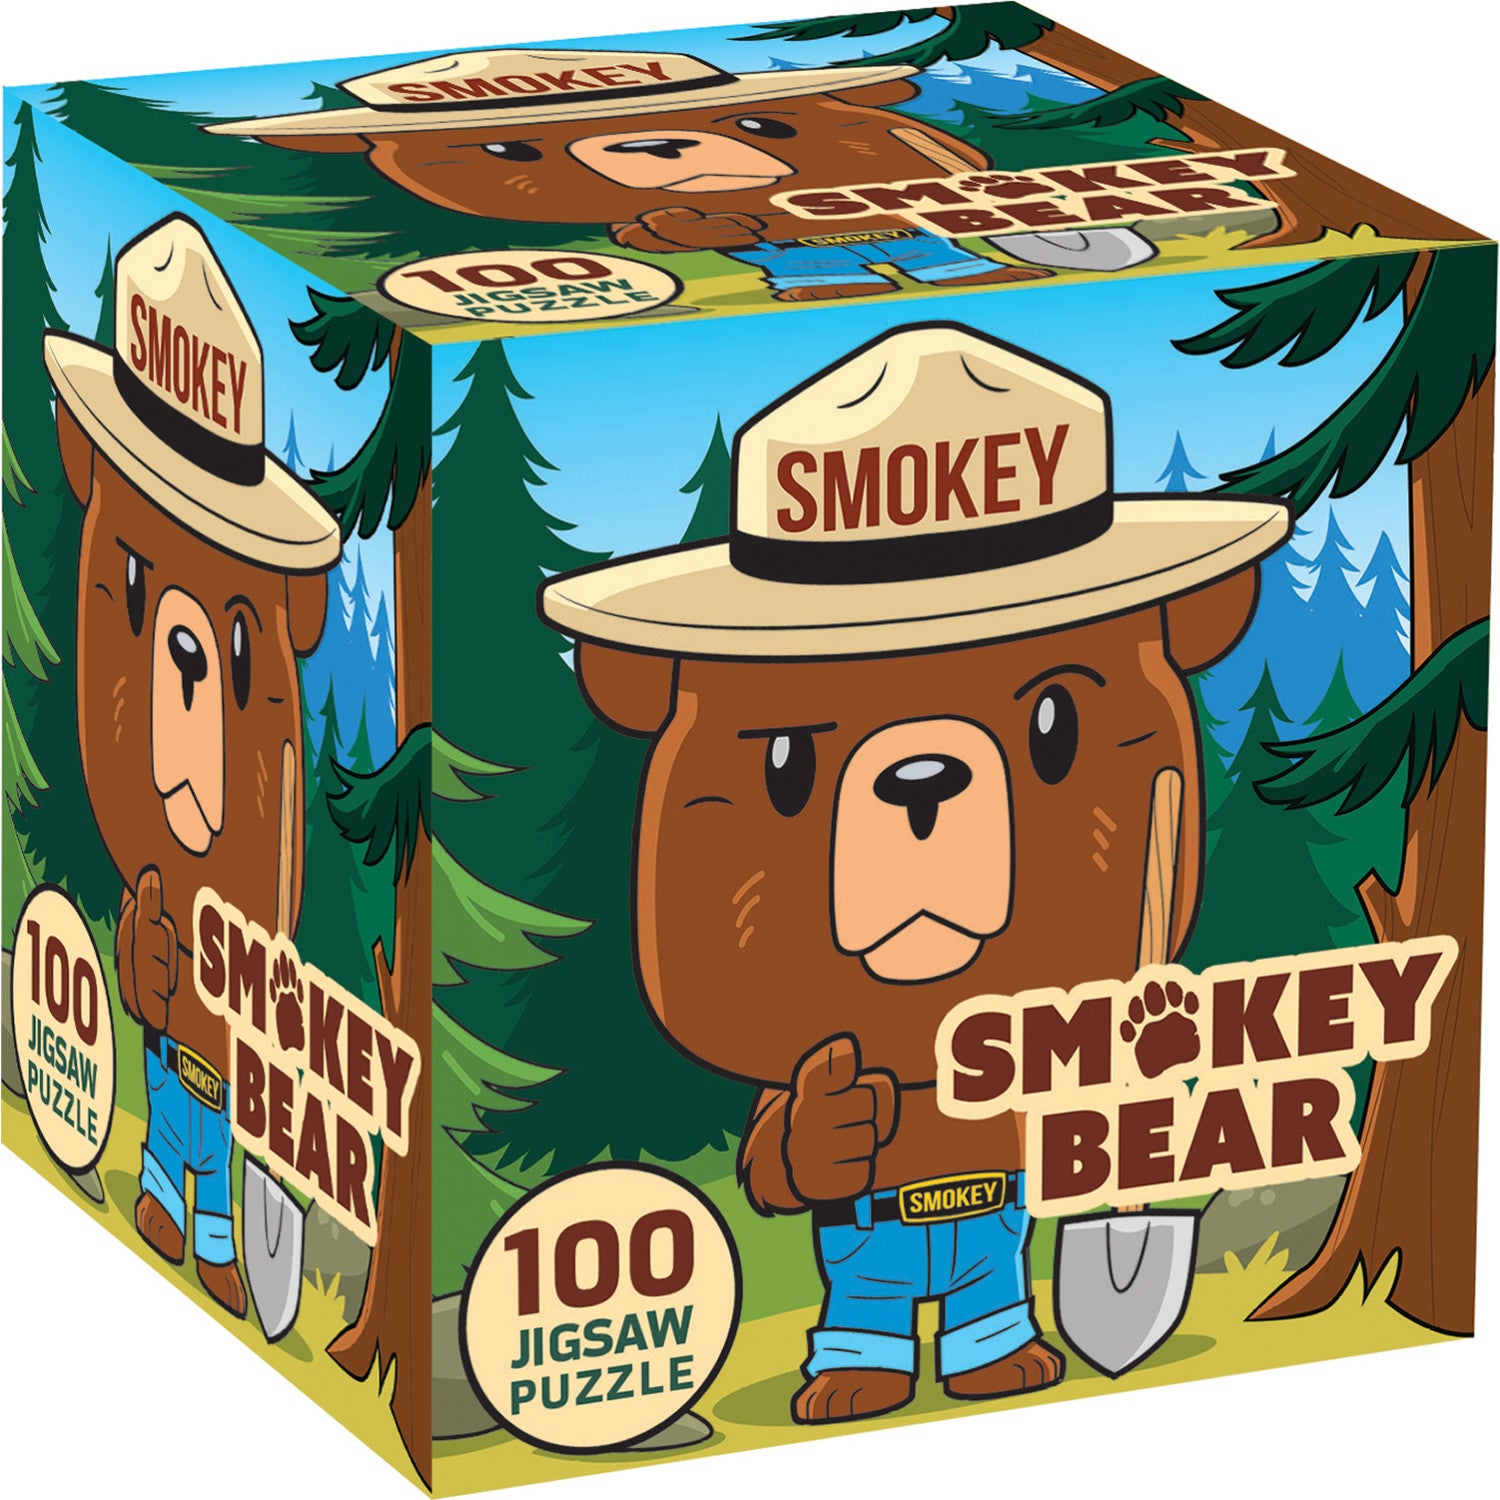 Smokey Bear - 100 Piece Square Jigsaw Puzzle